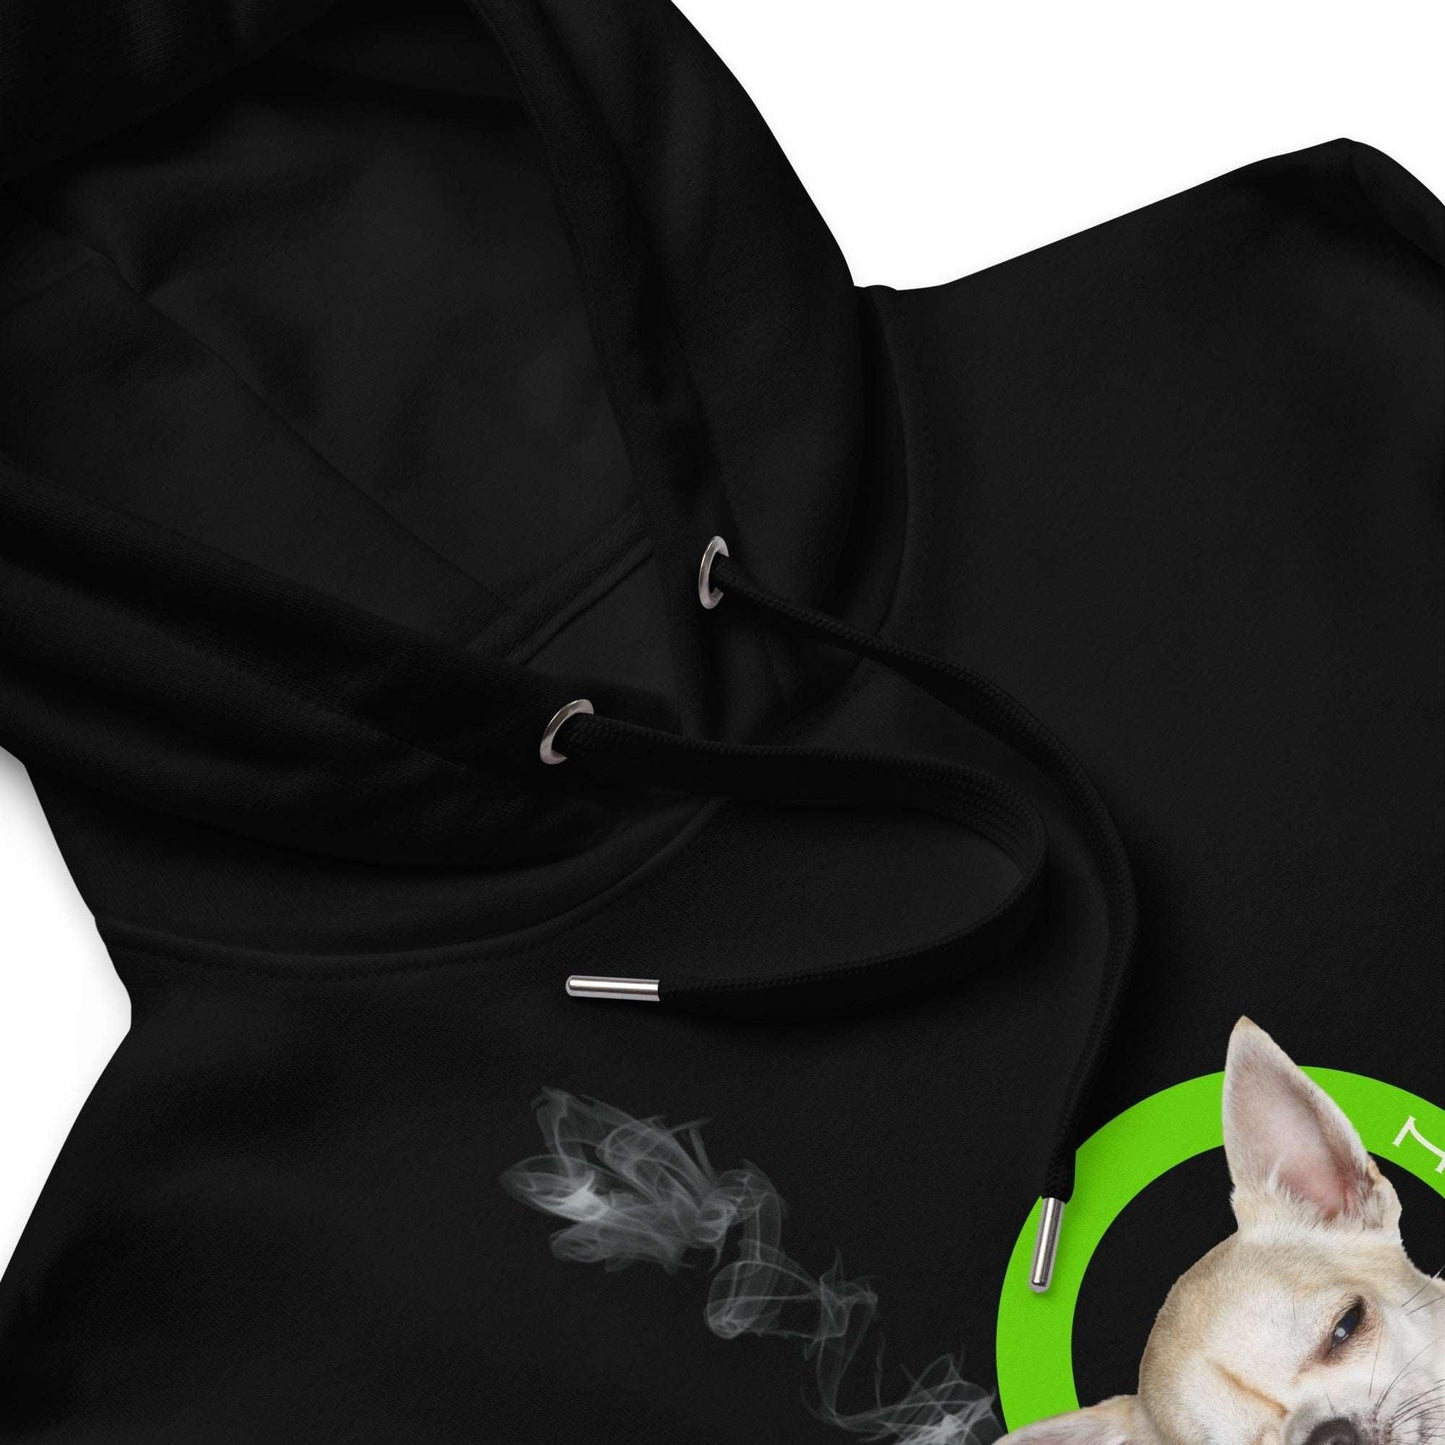 Yo Chill Bruh - very chill chihuahua smoking a cigarette - cool chihuahua meme - funny! Black premium eco hoodie.